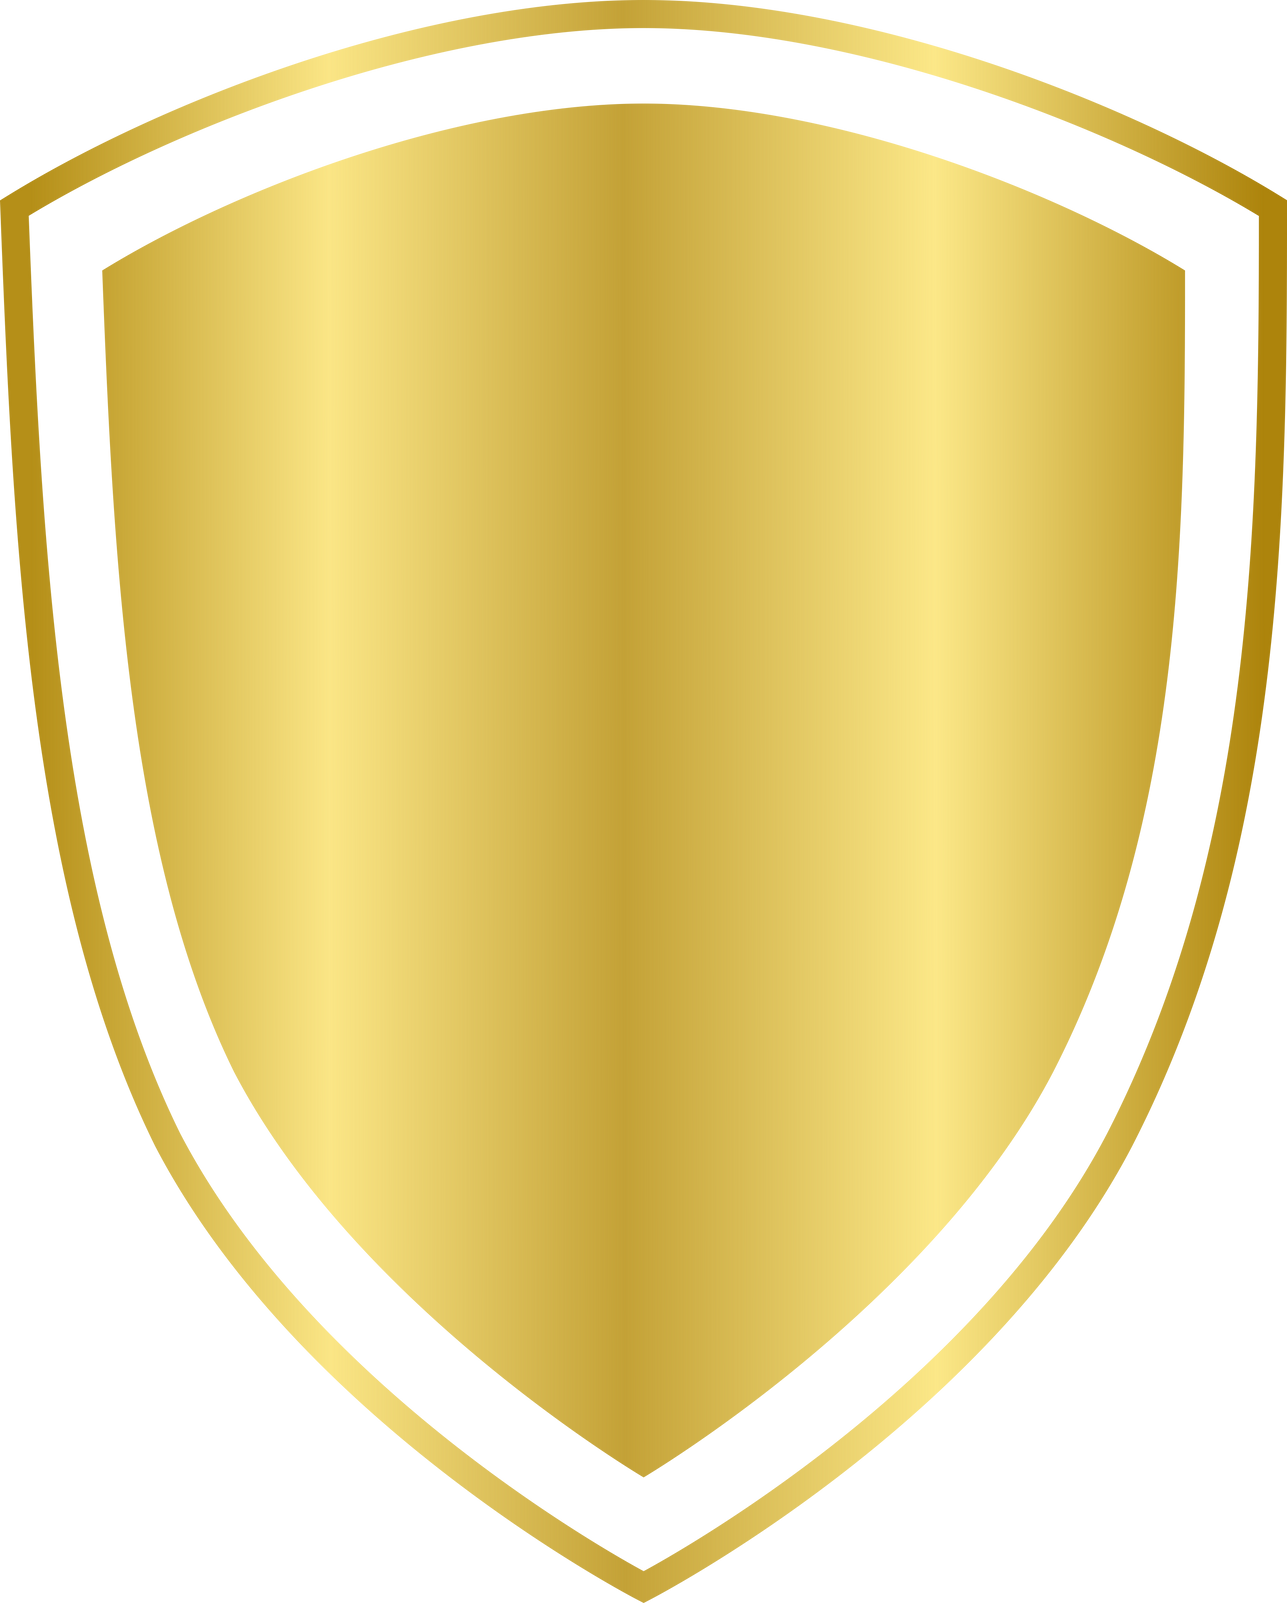 Gold Shield Icon. Blank Golden Shield